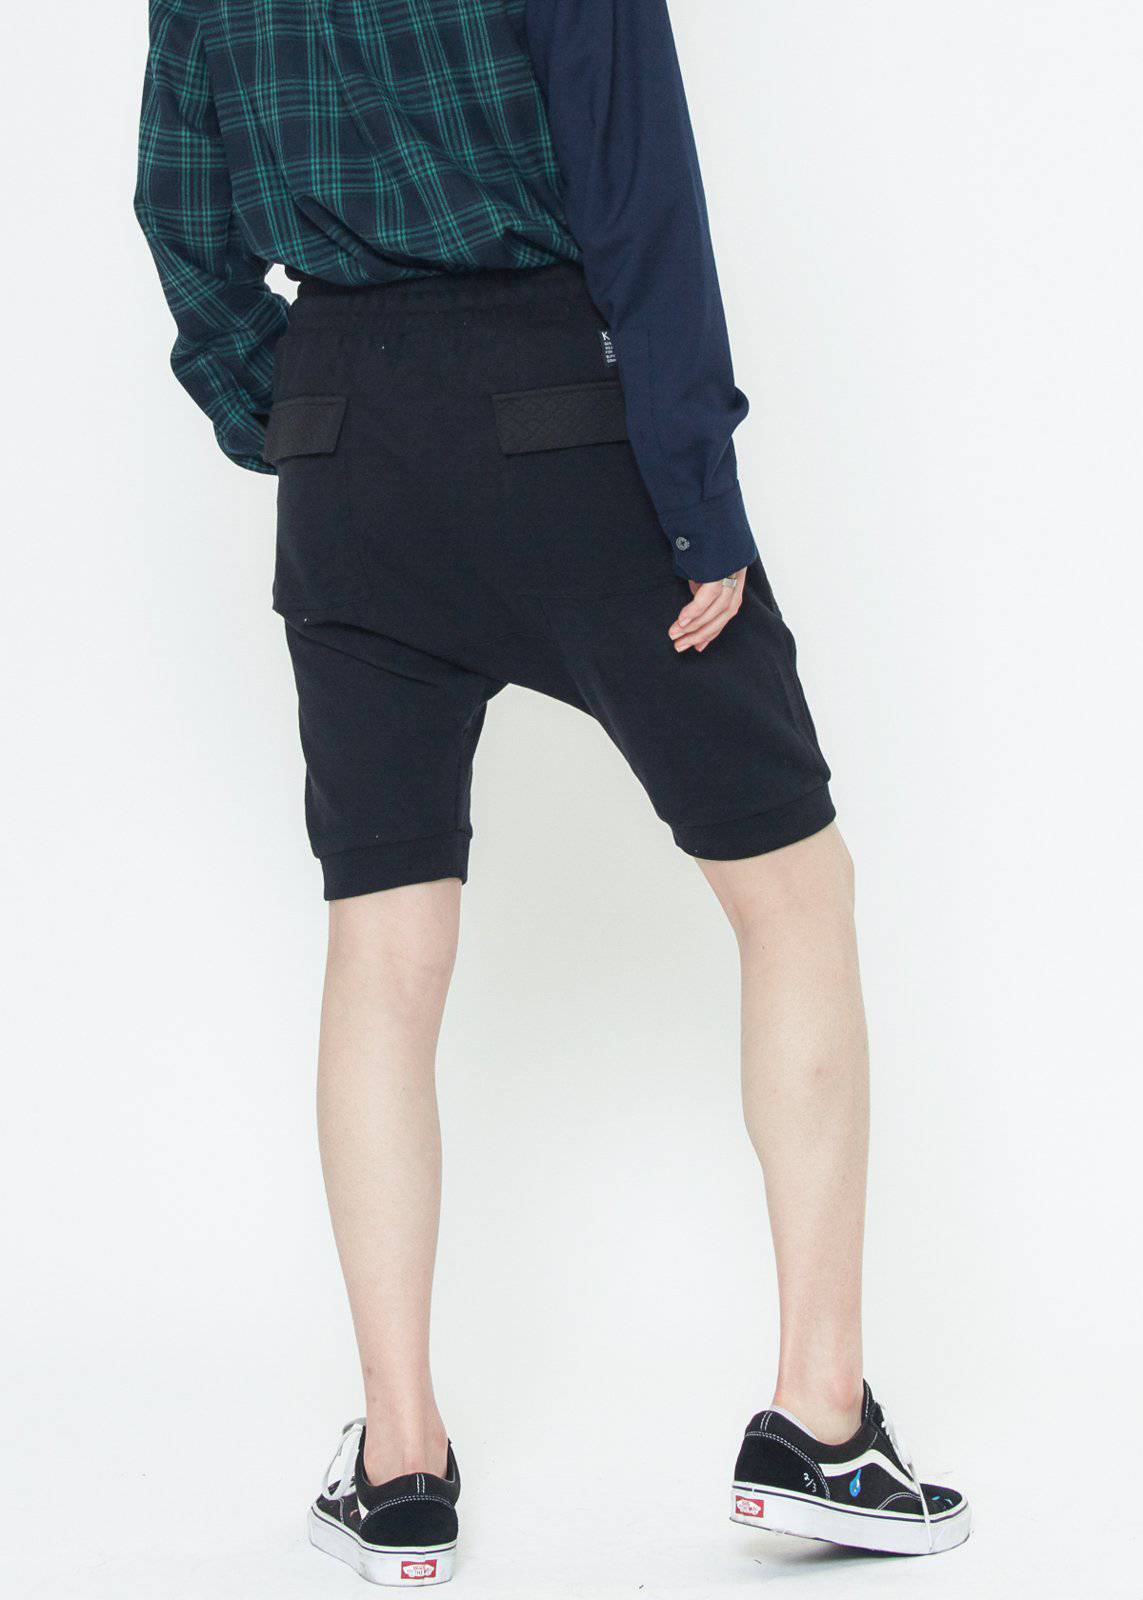 Konus Men's Drop Crotch Shorts Contrast Pockets in Black by Shop at Konus